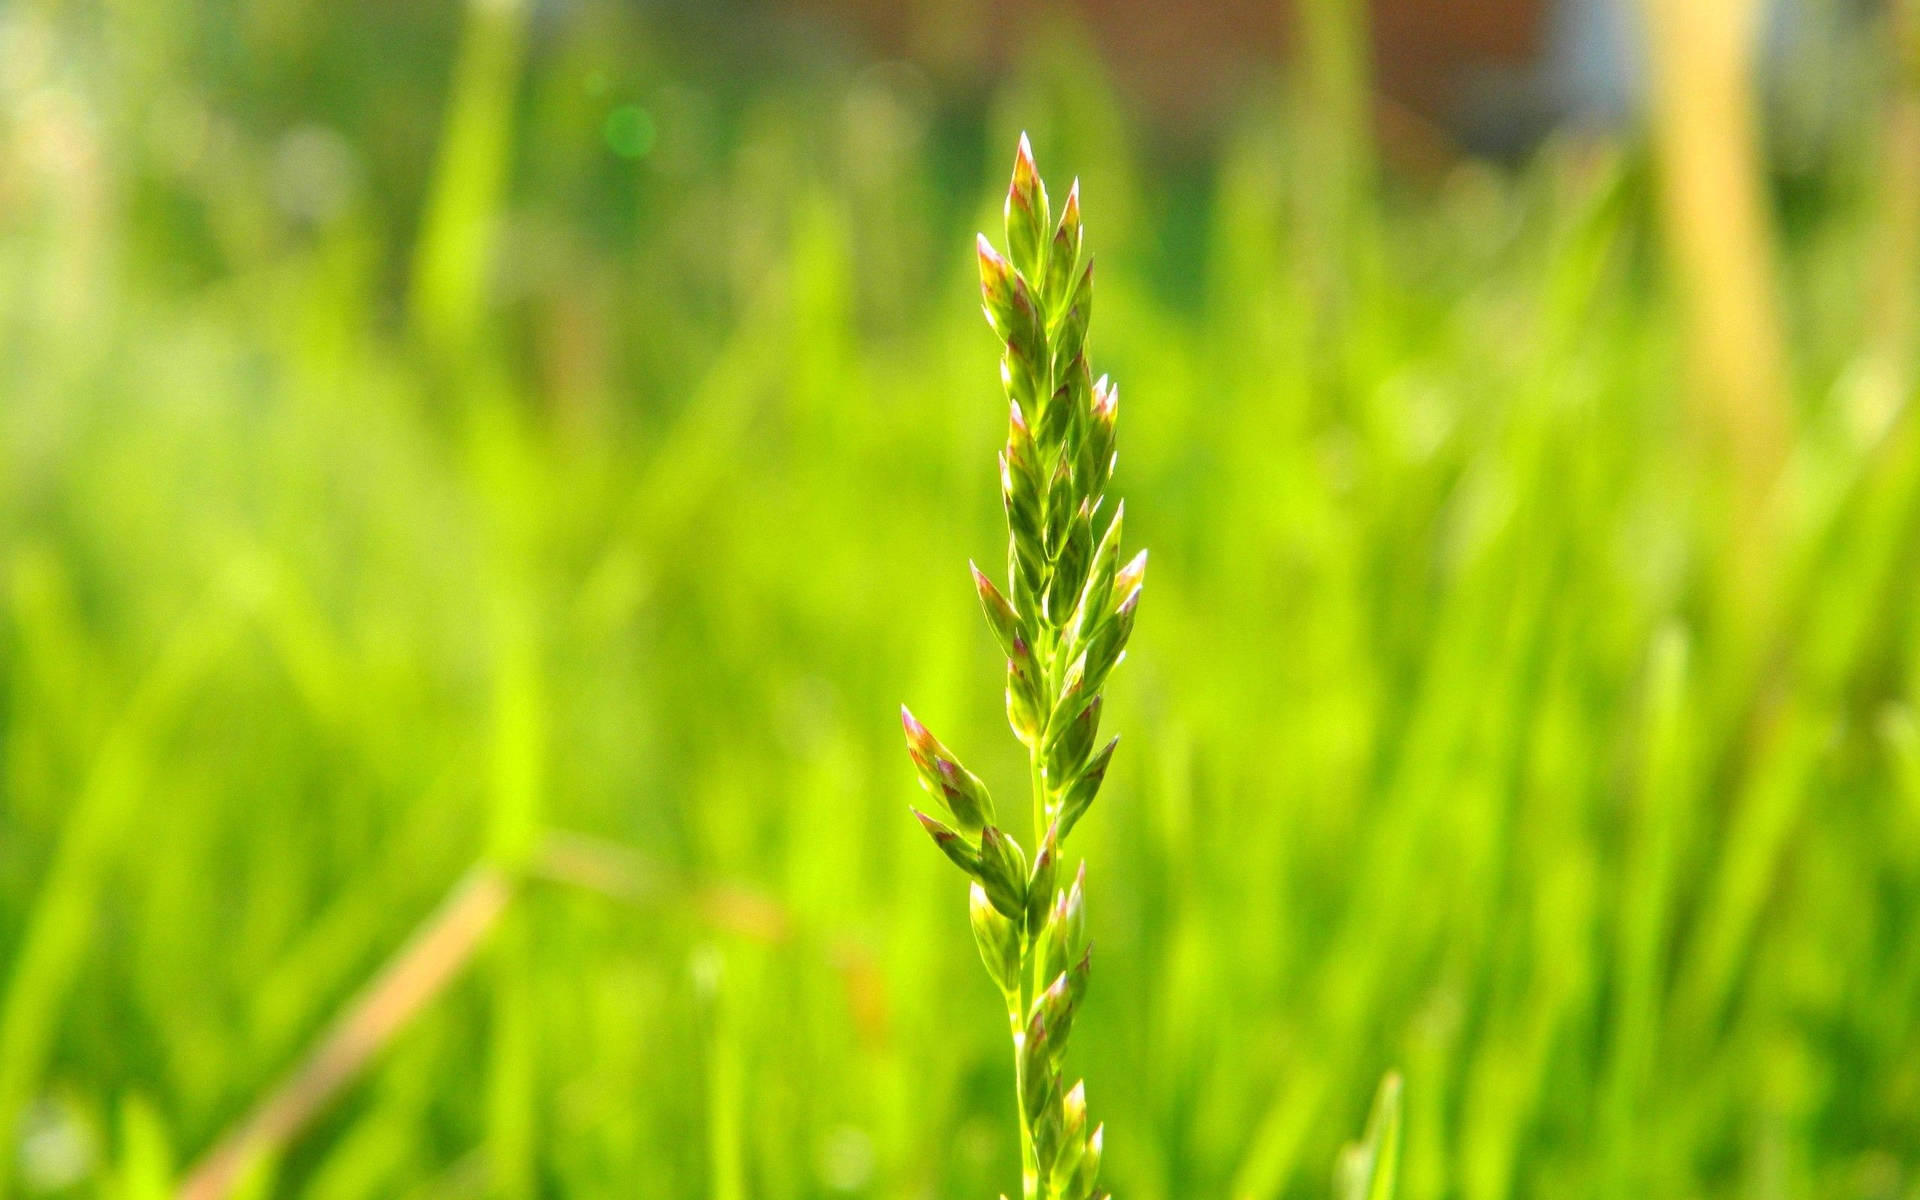 Plant Stalk On Grass Background